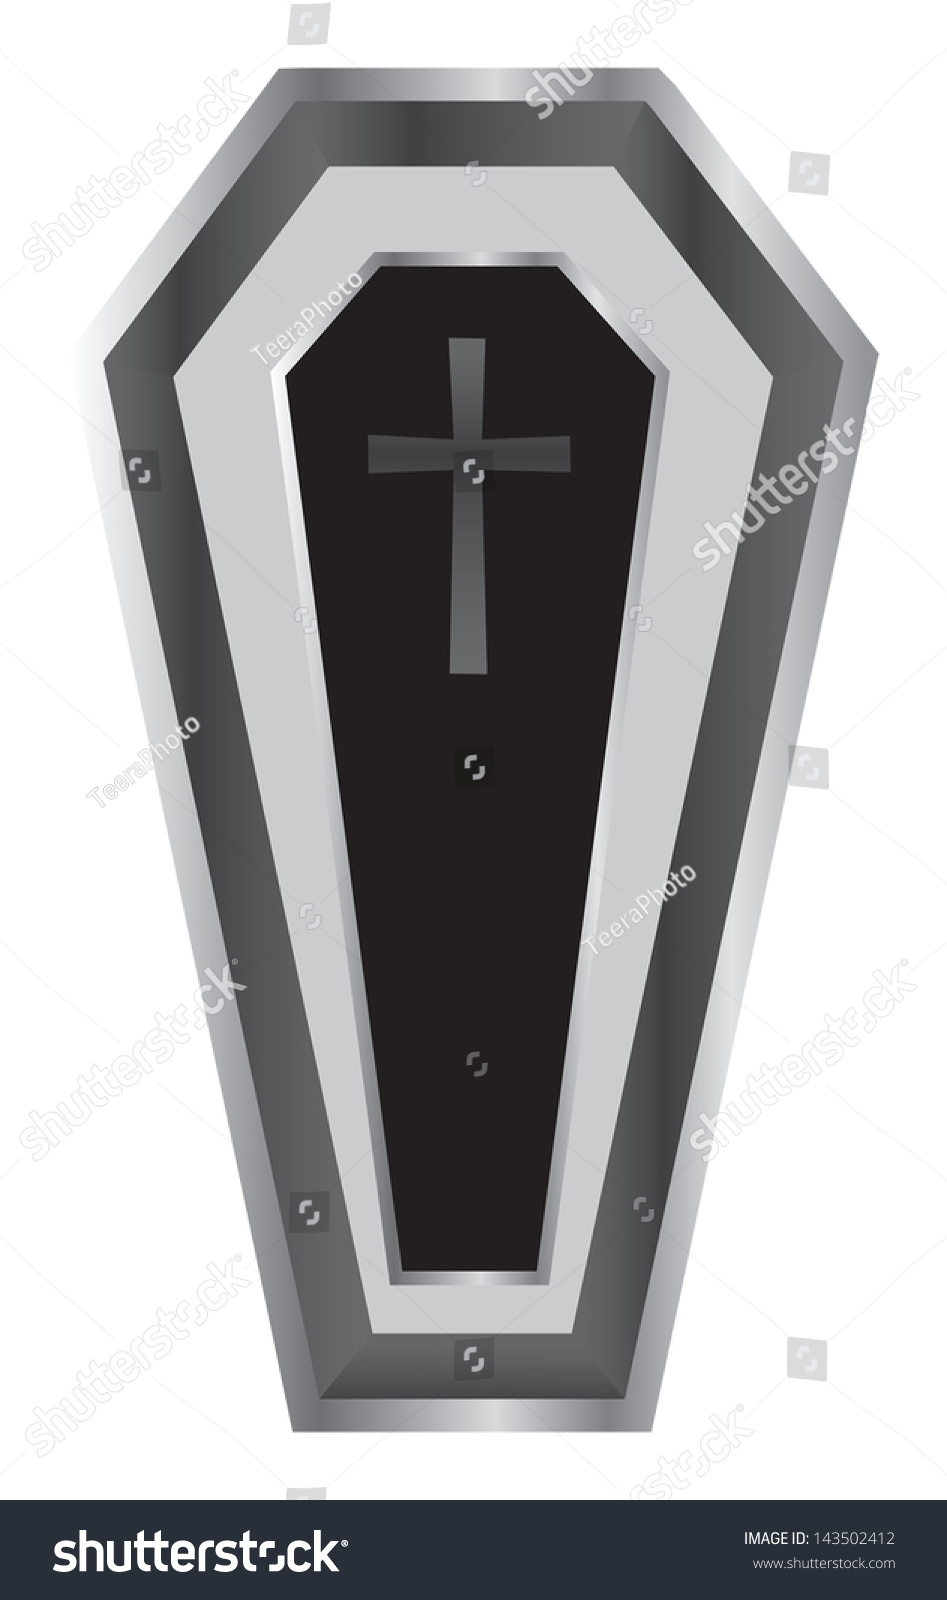 Black Coffin Vector Illustration. - 143502412 : Shutterstock